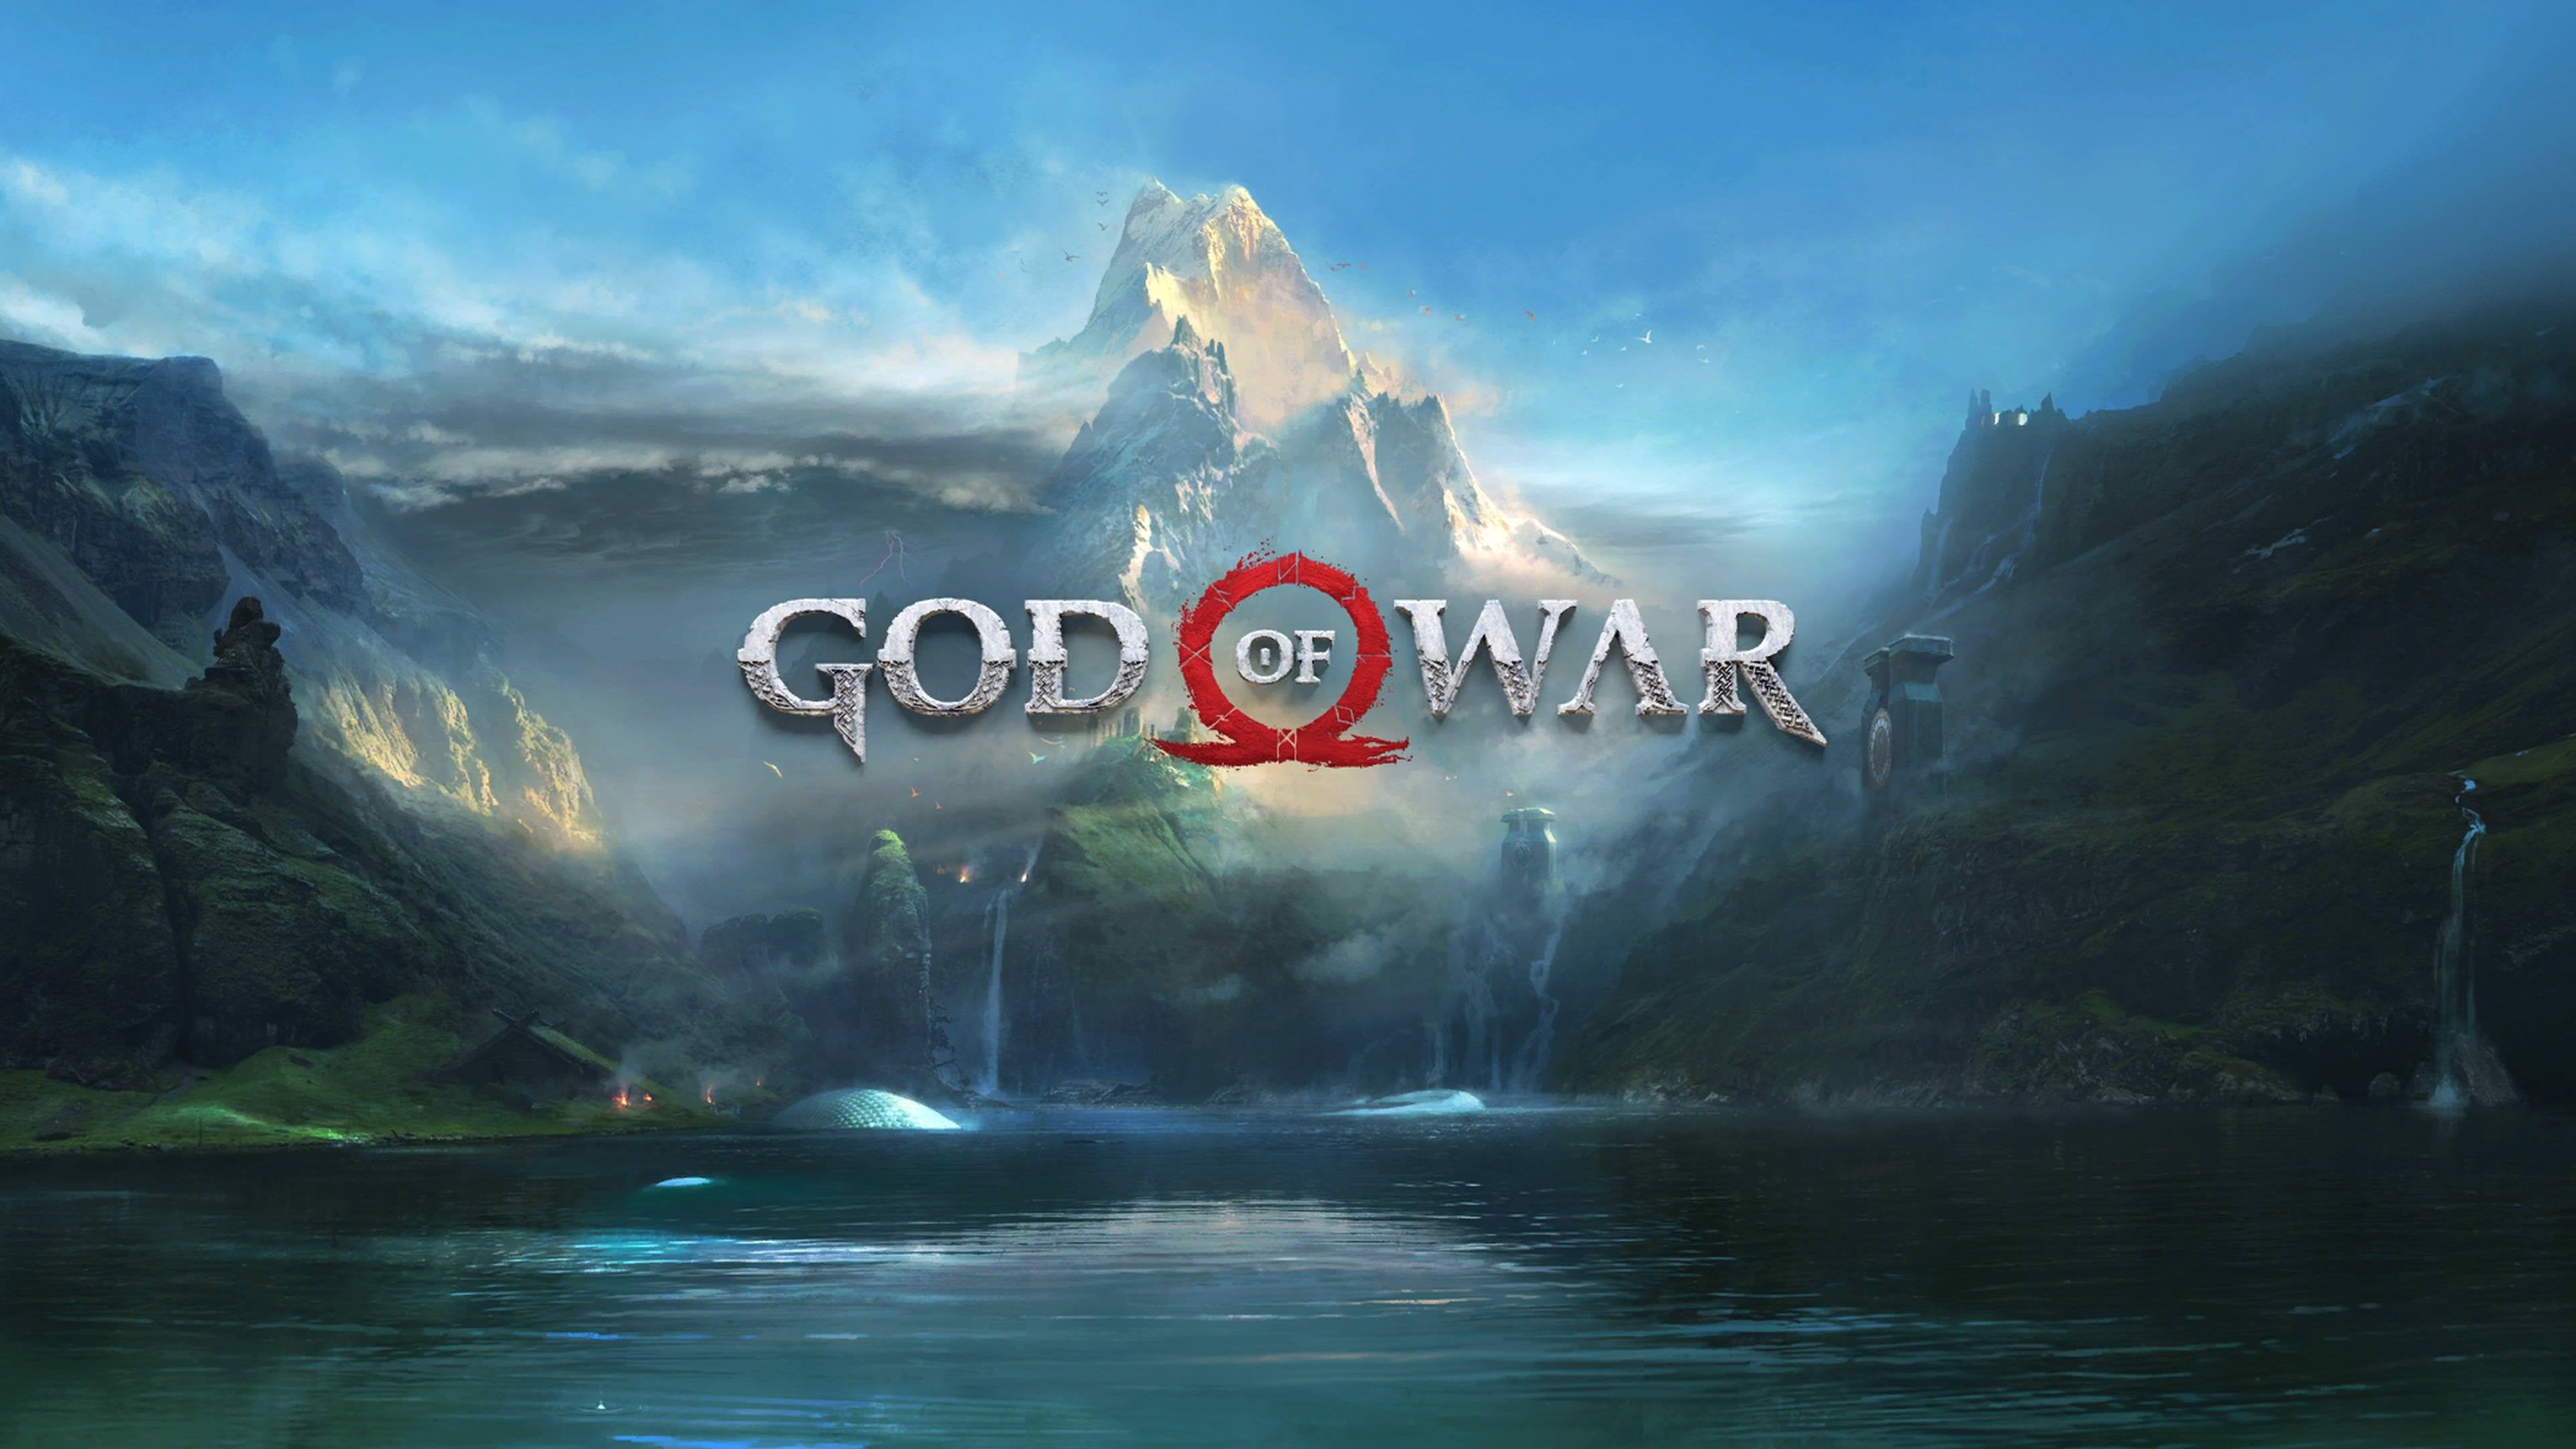 Massive God of War 4k Wallpaper Set (in game order, so more spoilers further down)